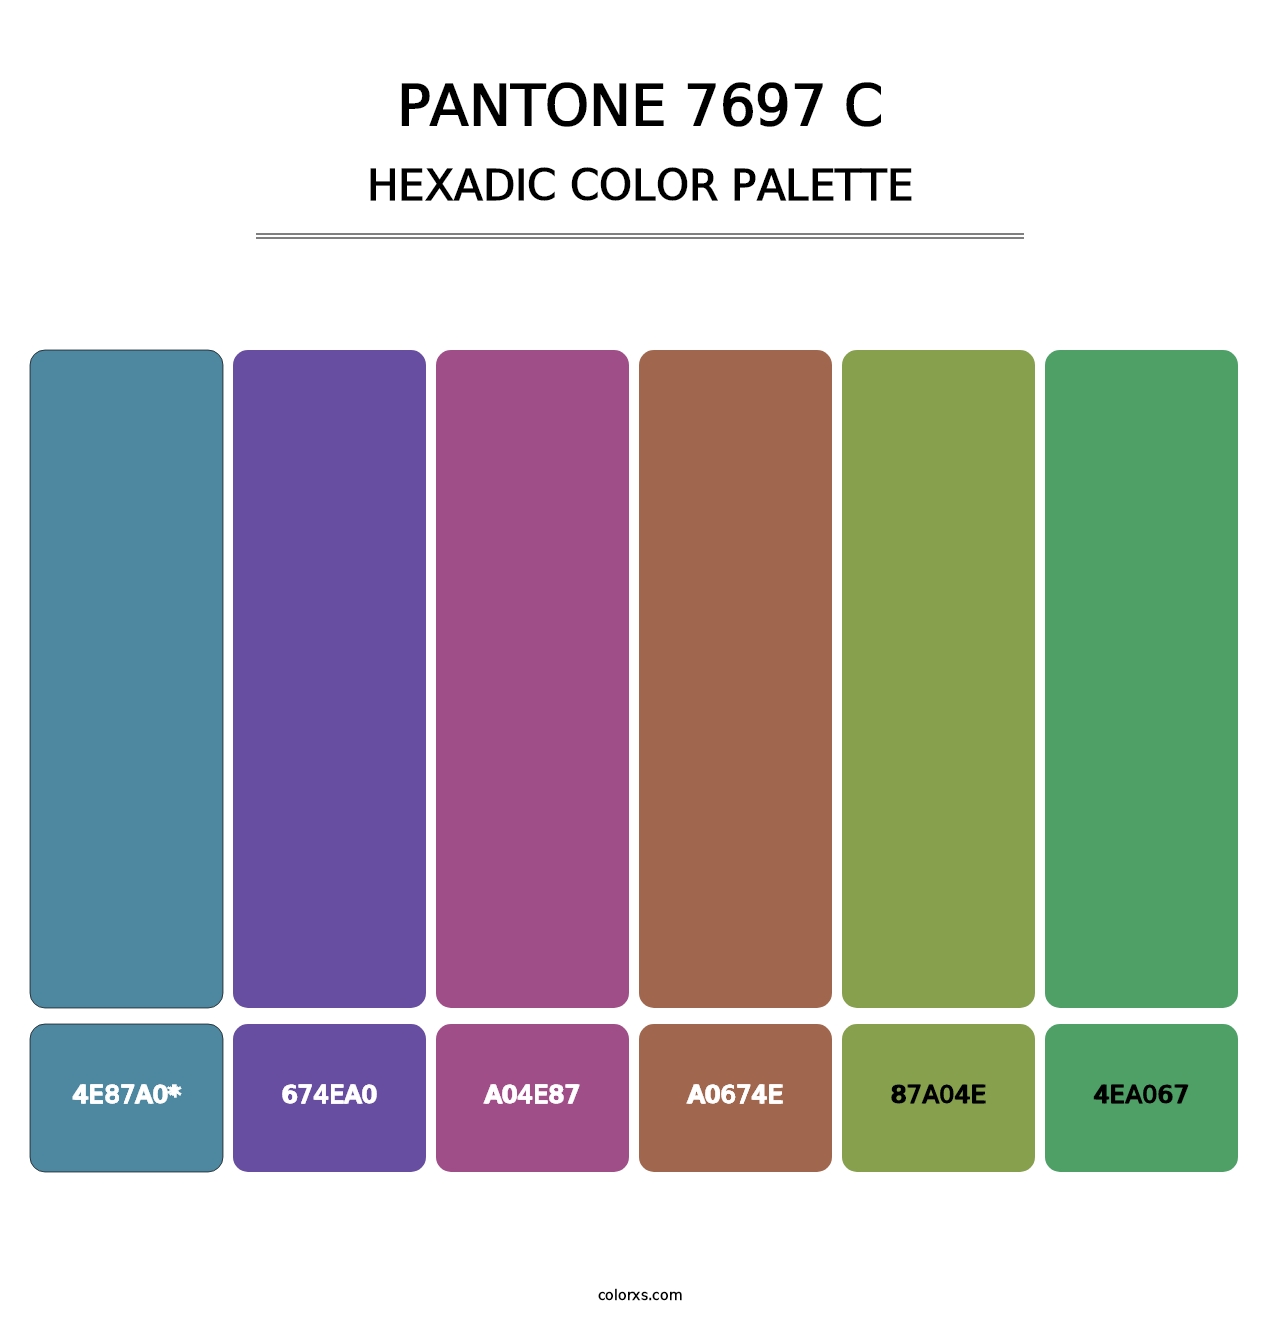 PANTONE 7697 C - Hexadic Color Palette